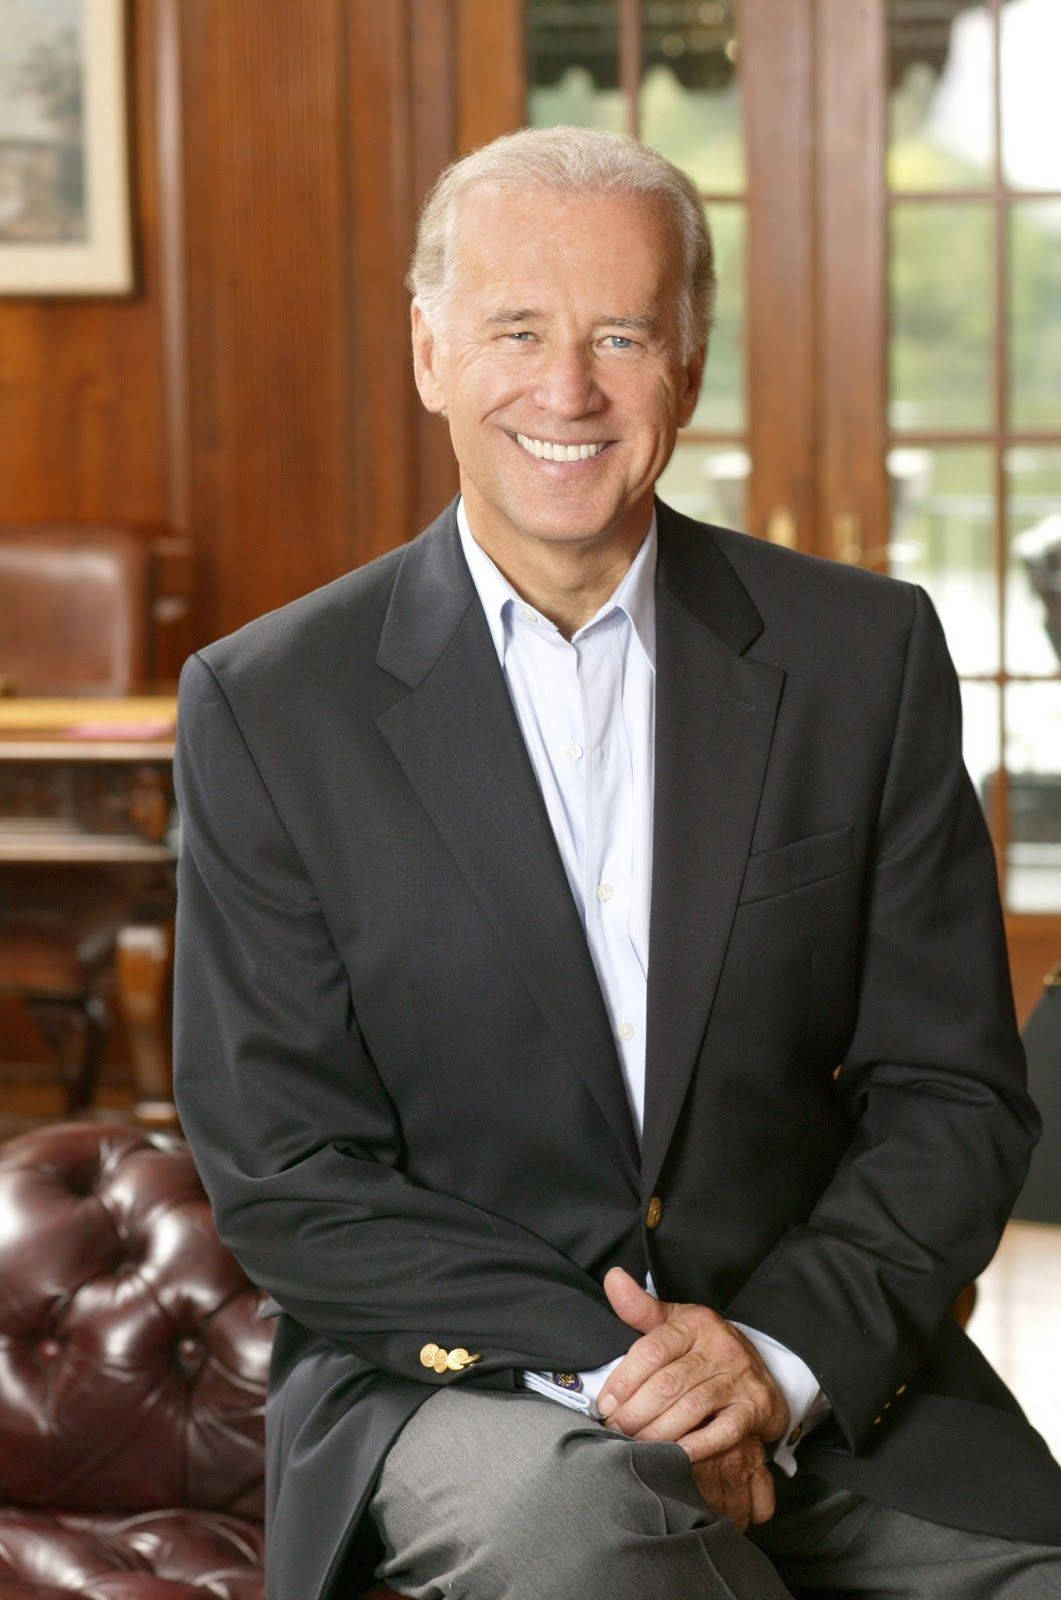 Joe Biden, Smiling During His 2020 Campaign